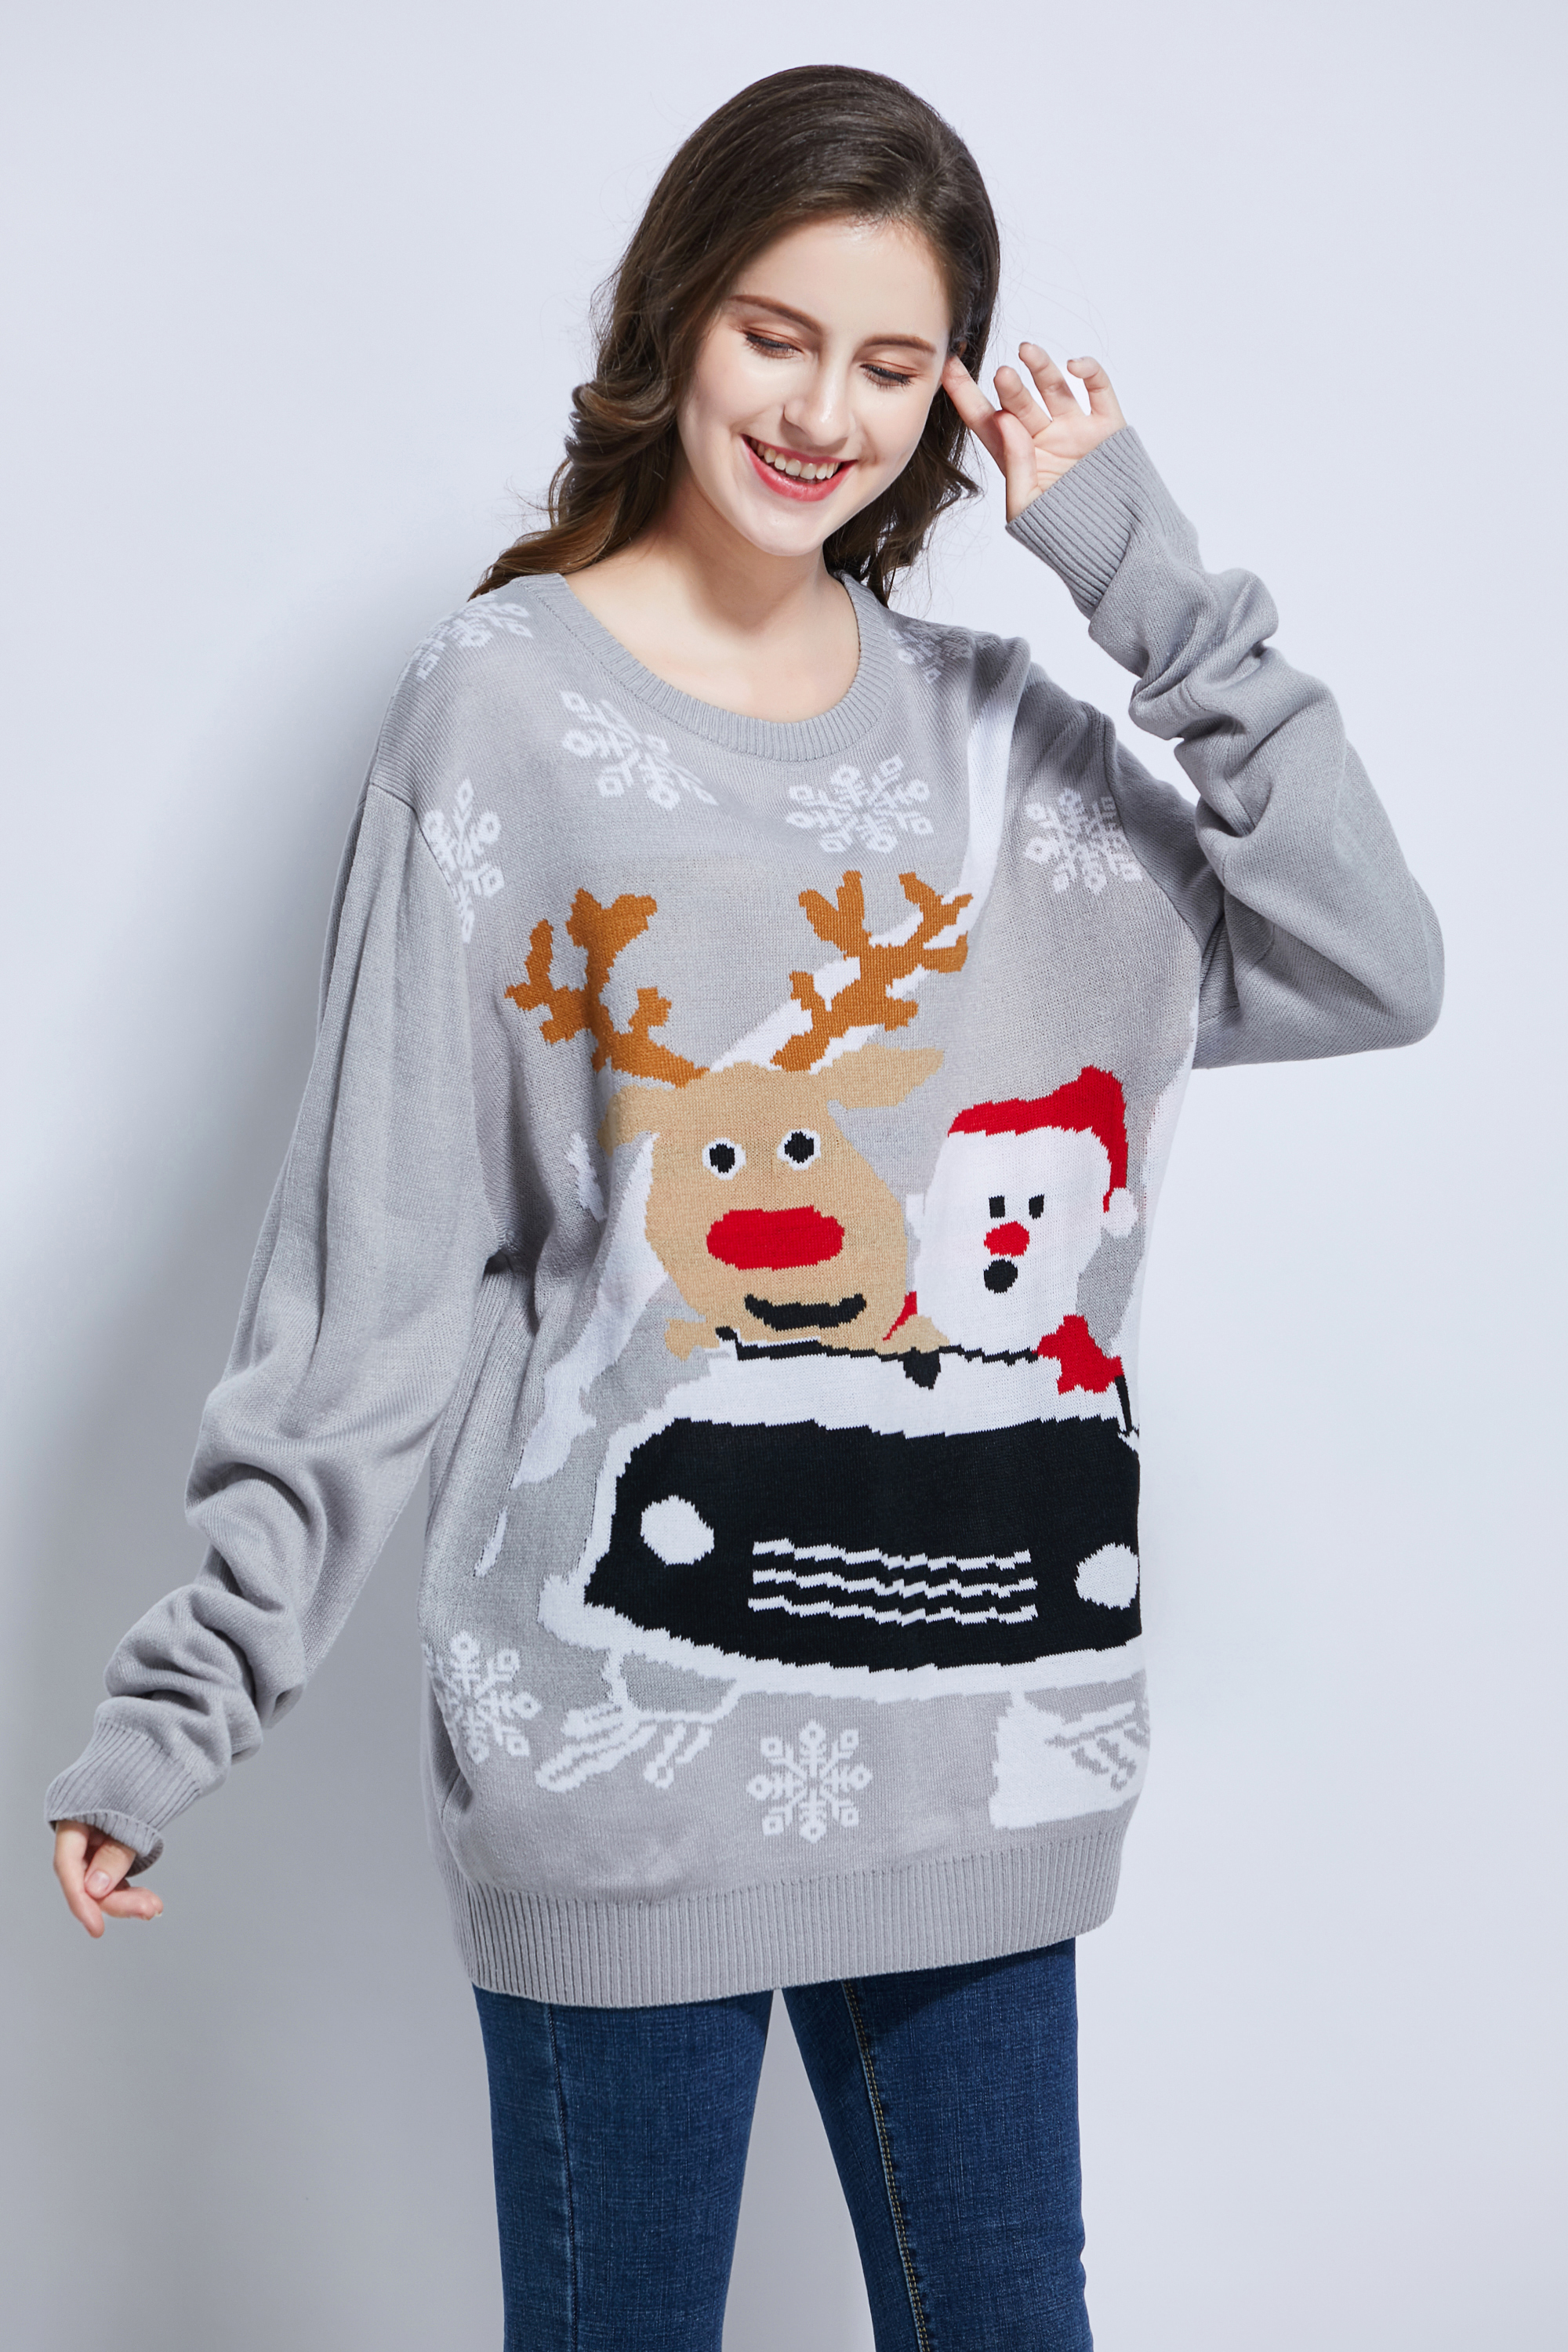 Team club player promotion theme motif jacquard unisex Christmas sweater rudolph reindeer Christmas sweater Xmas sweater